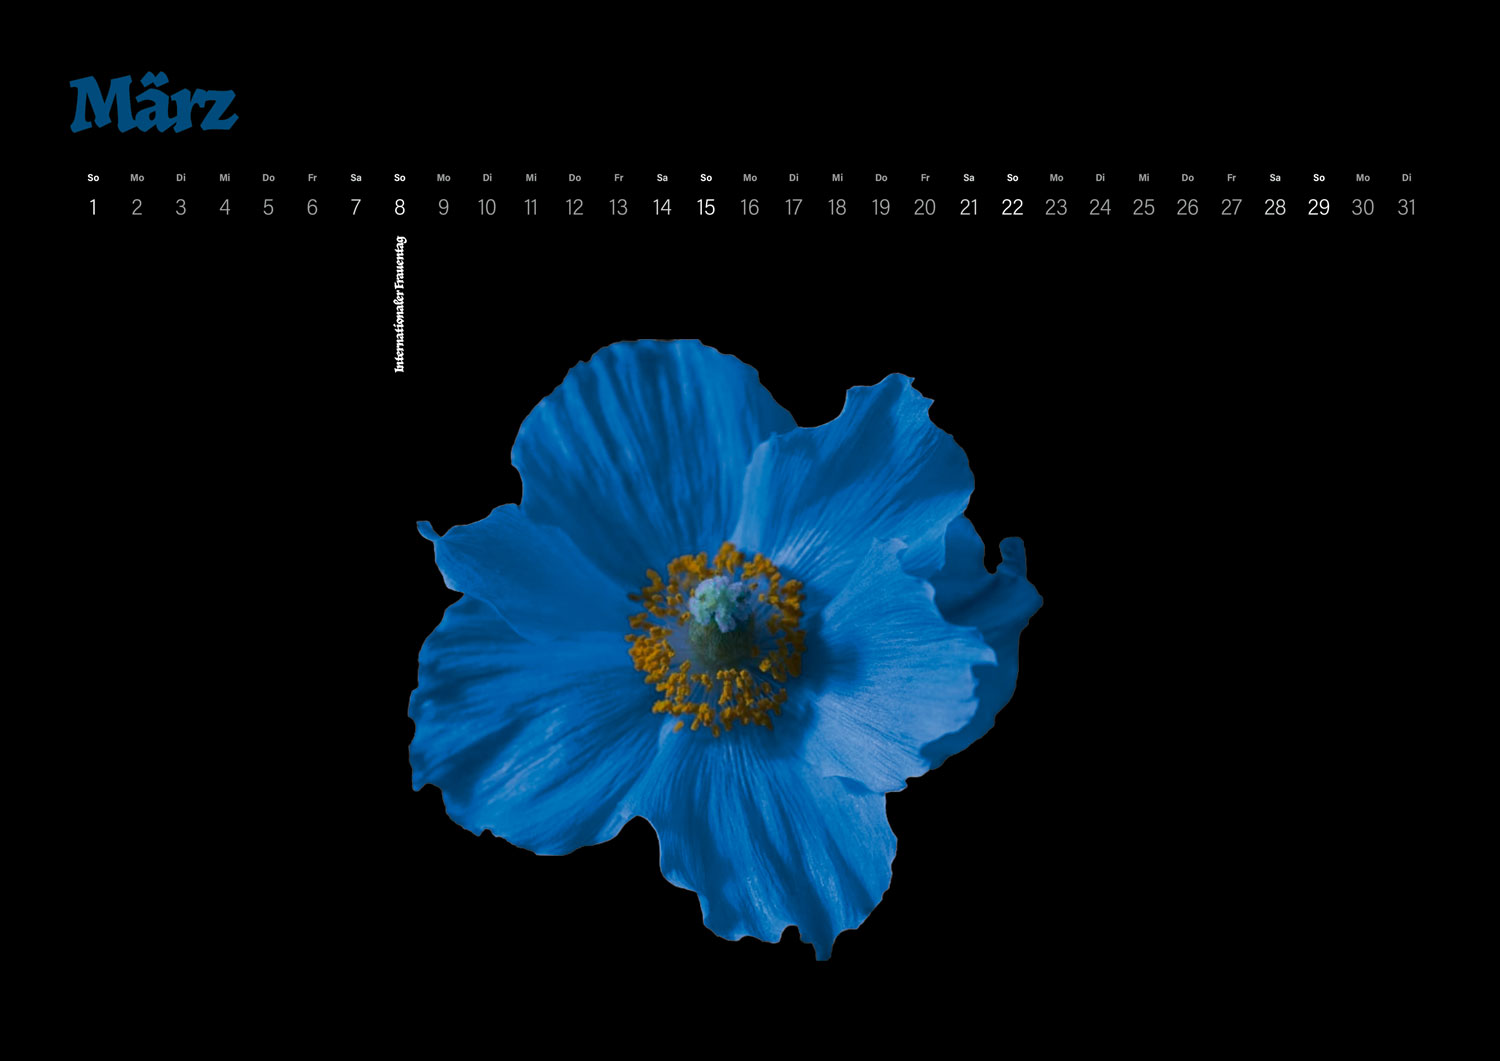 Calidario PANTONE calendar 2020 in March with a floral motif